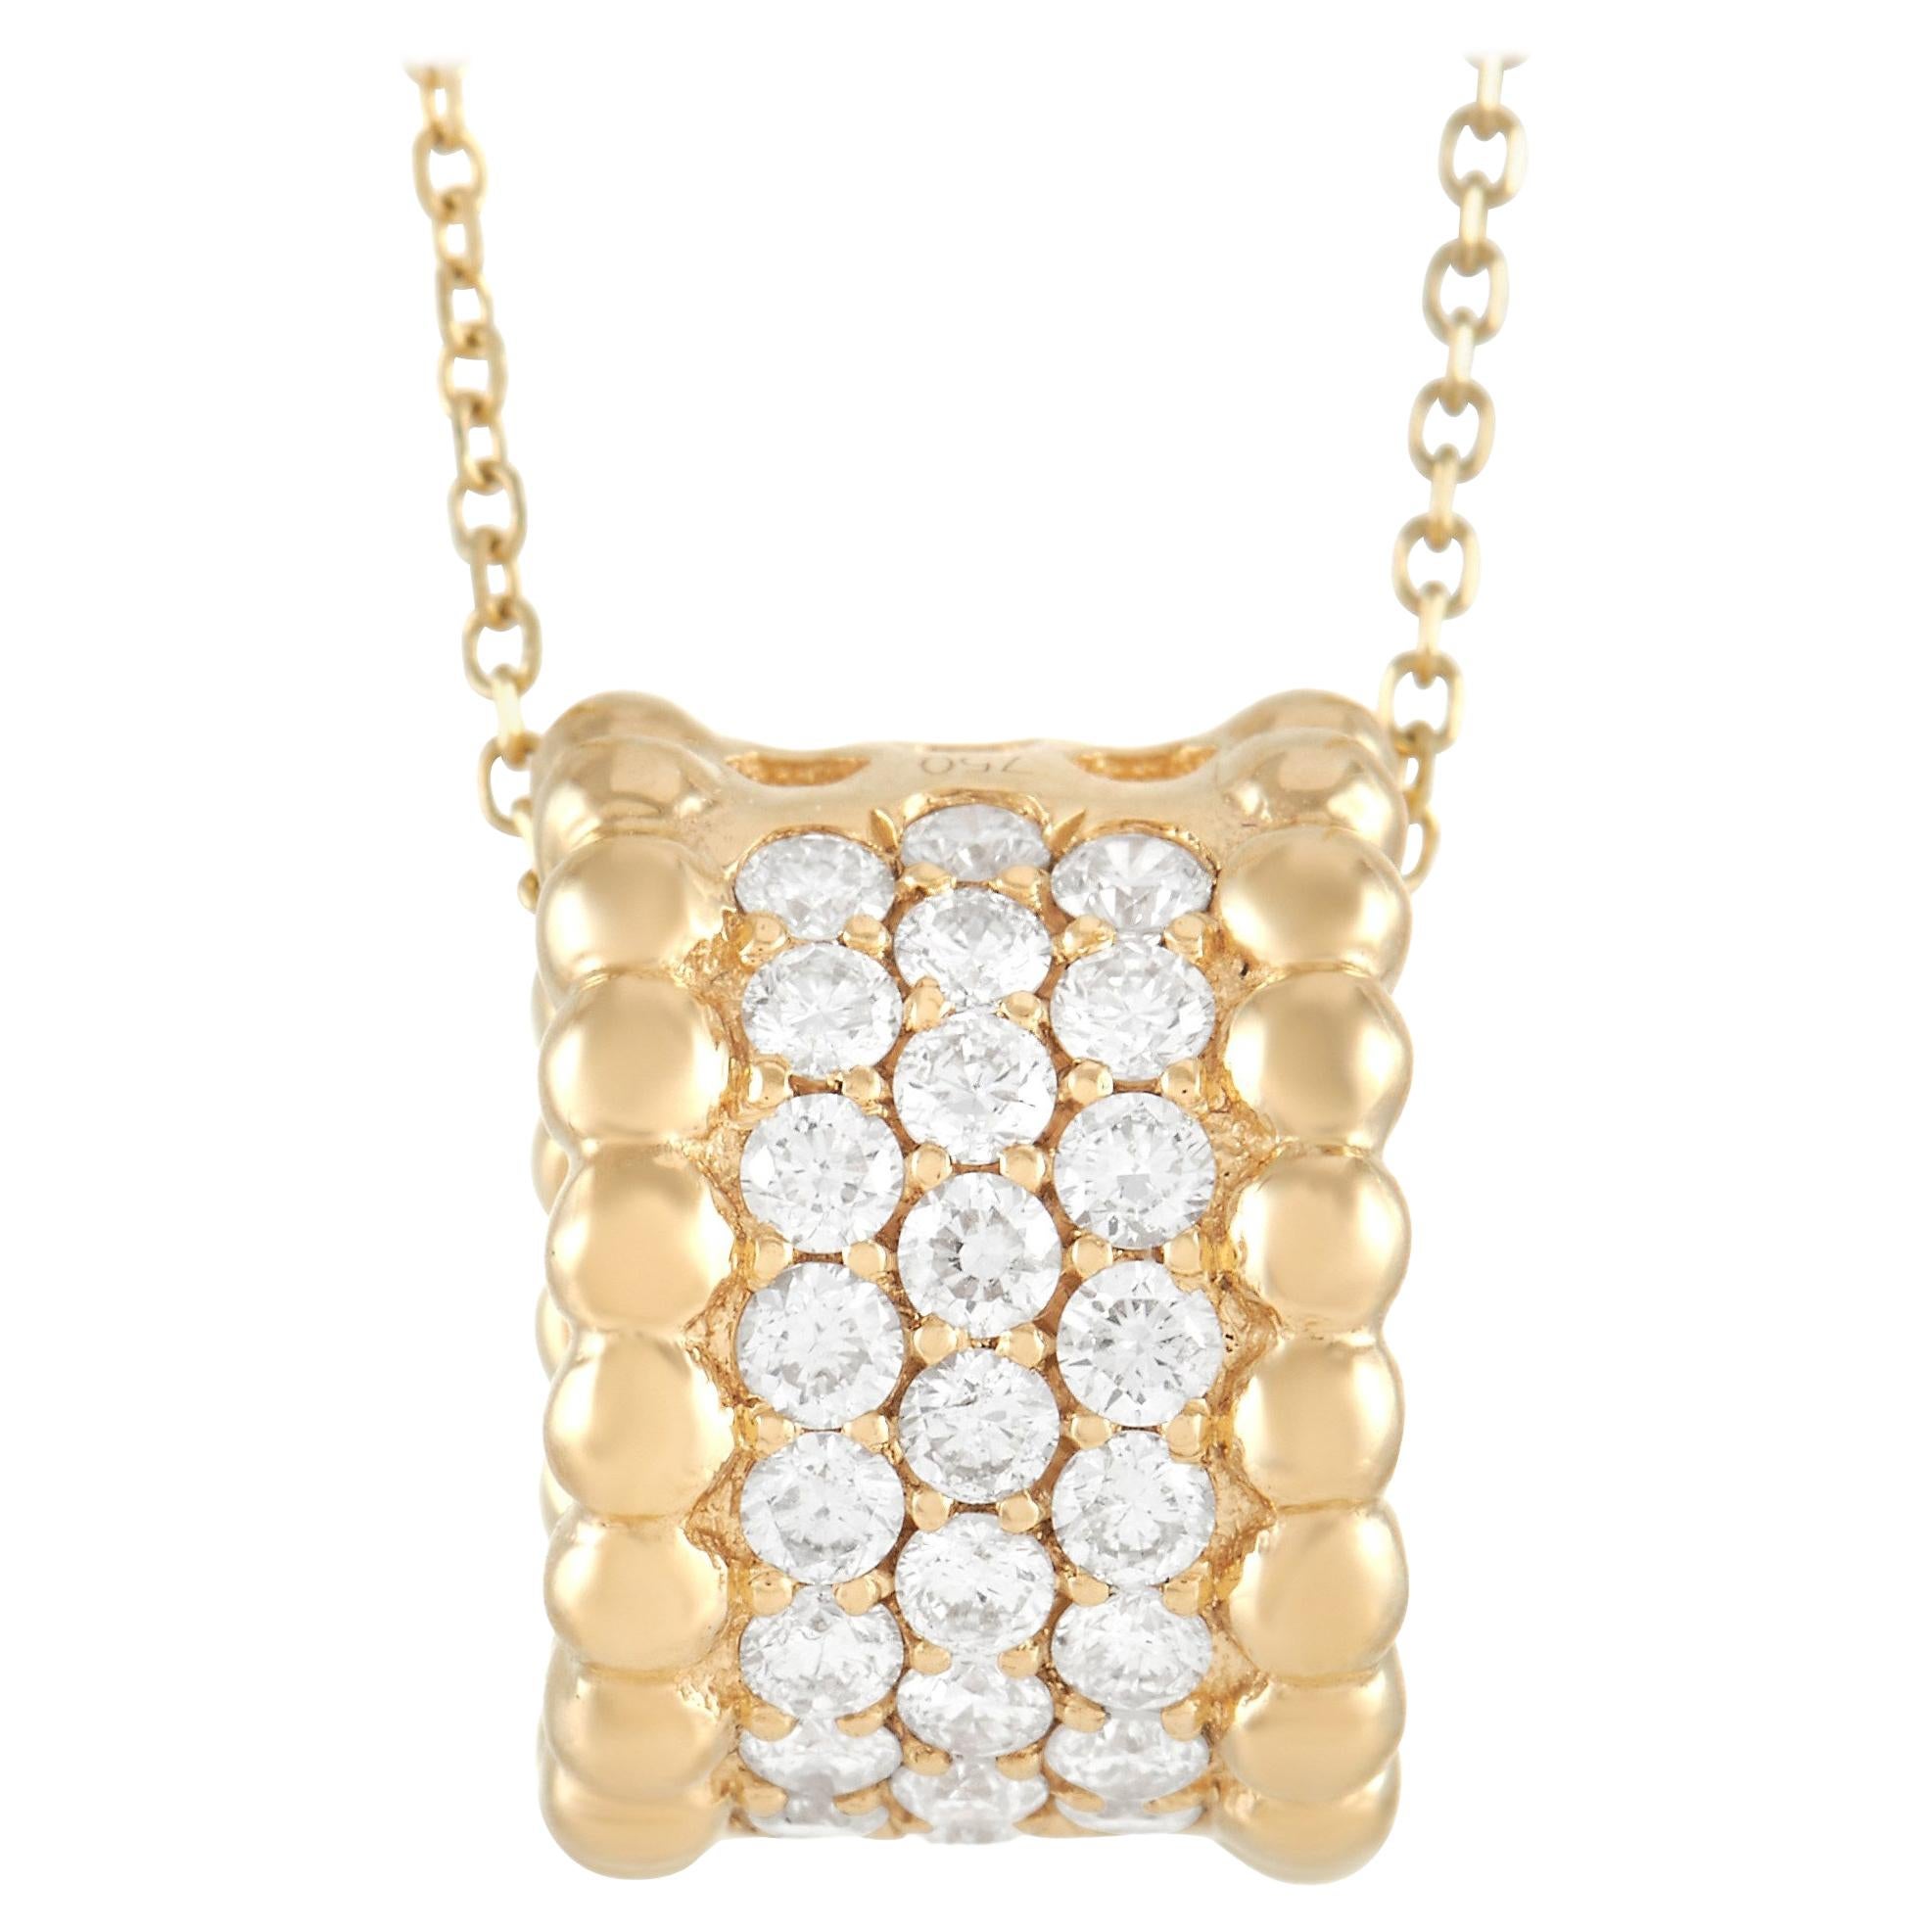 LB Exclusive 18K Yellow Gold 0.58 ct Diamond Pendant Necklace